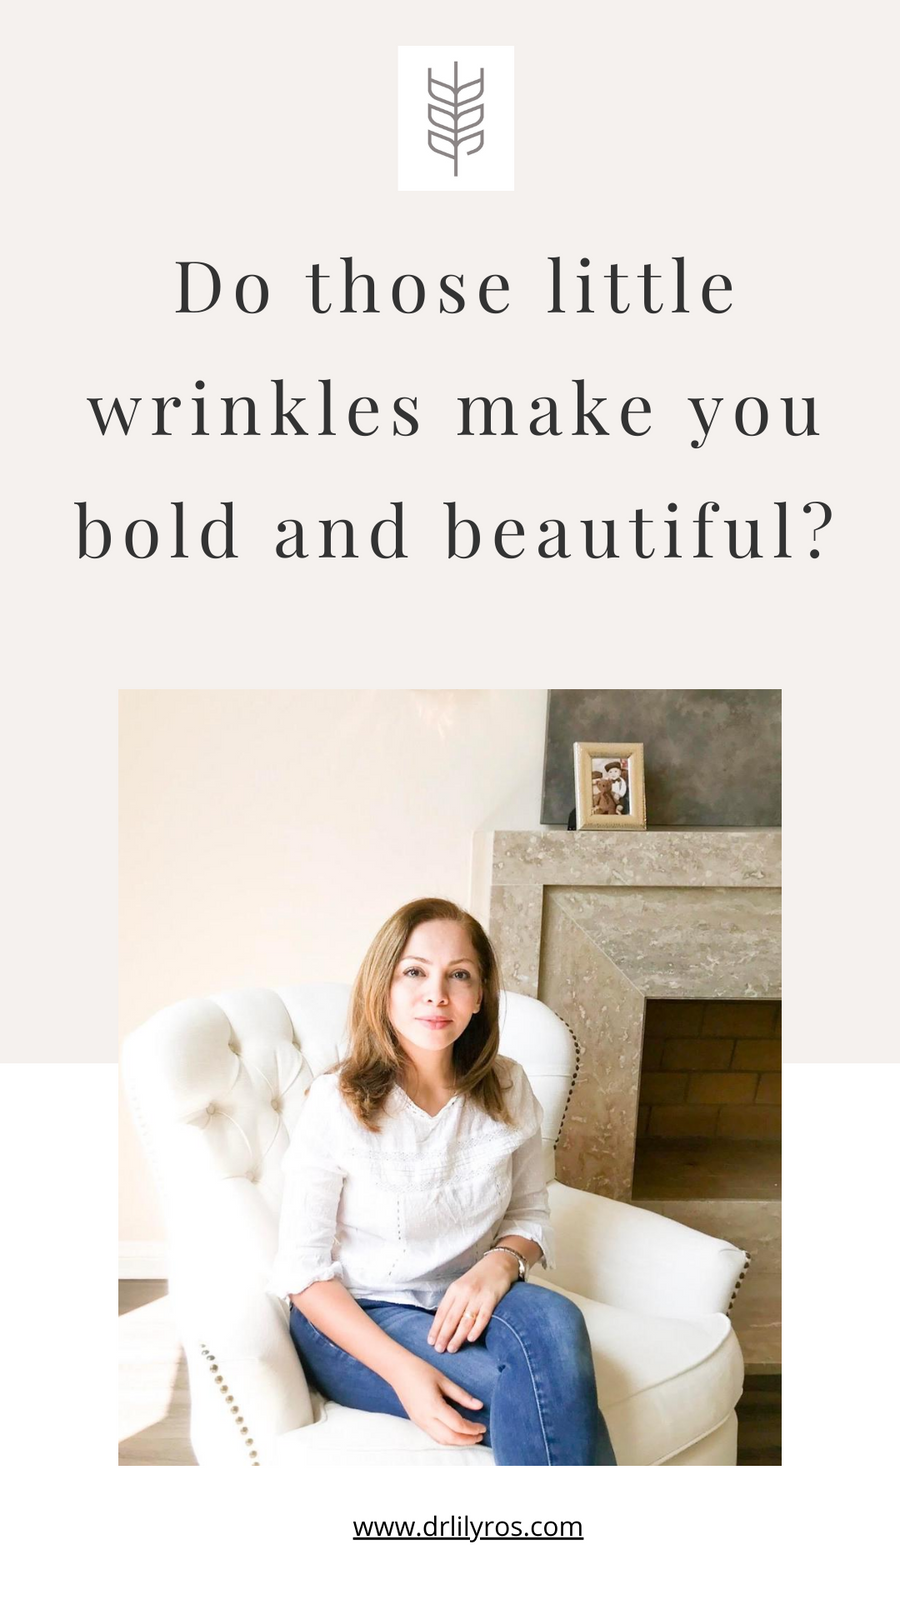 Do those little wrinkles make you bold and beautiful?